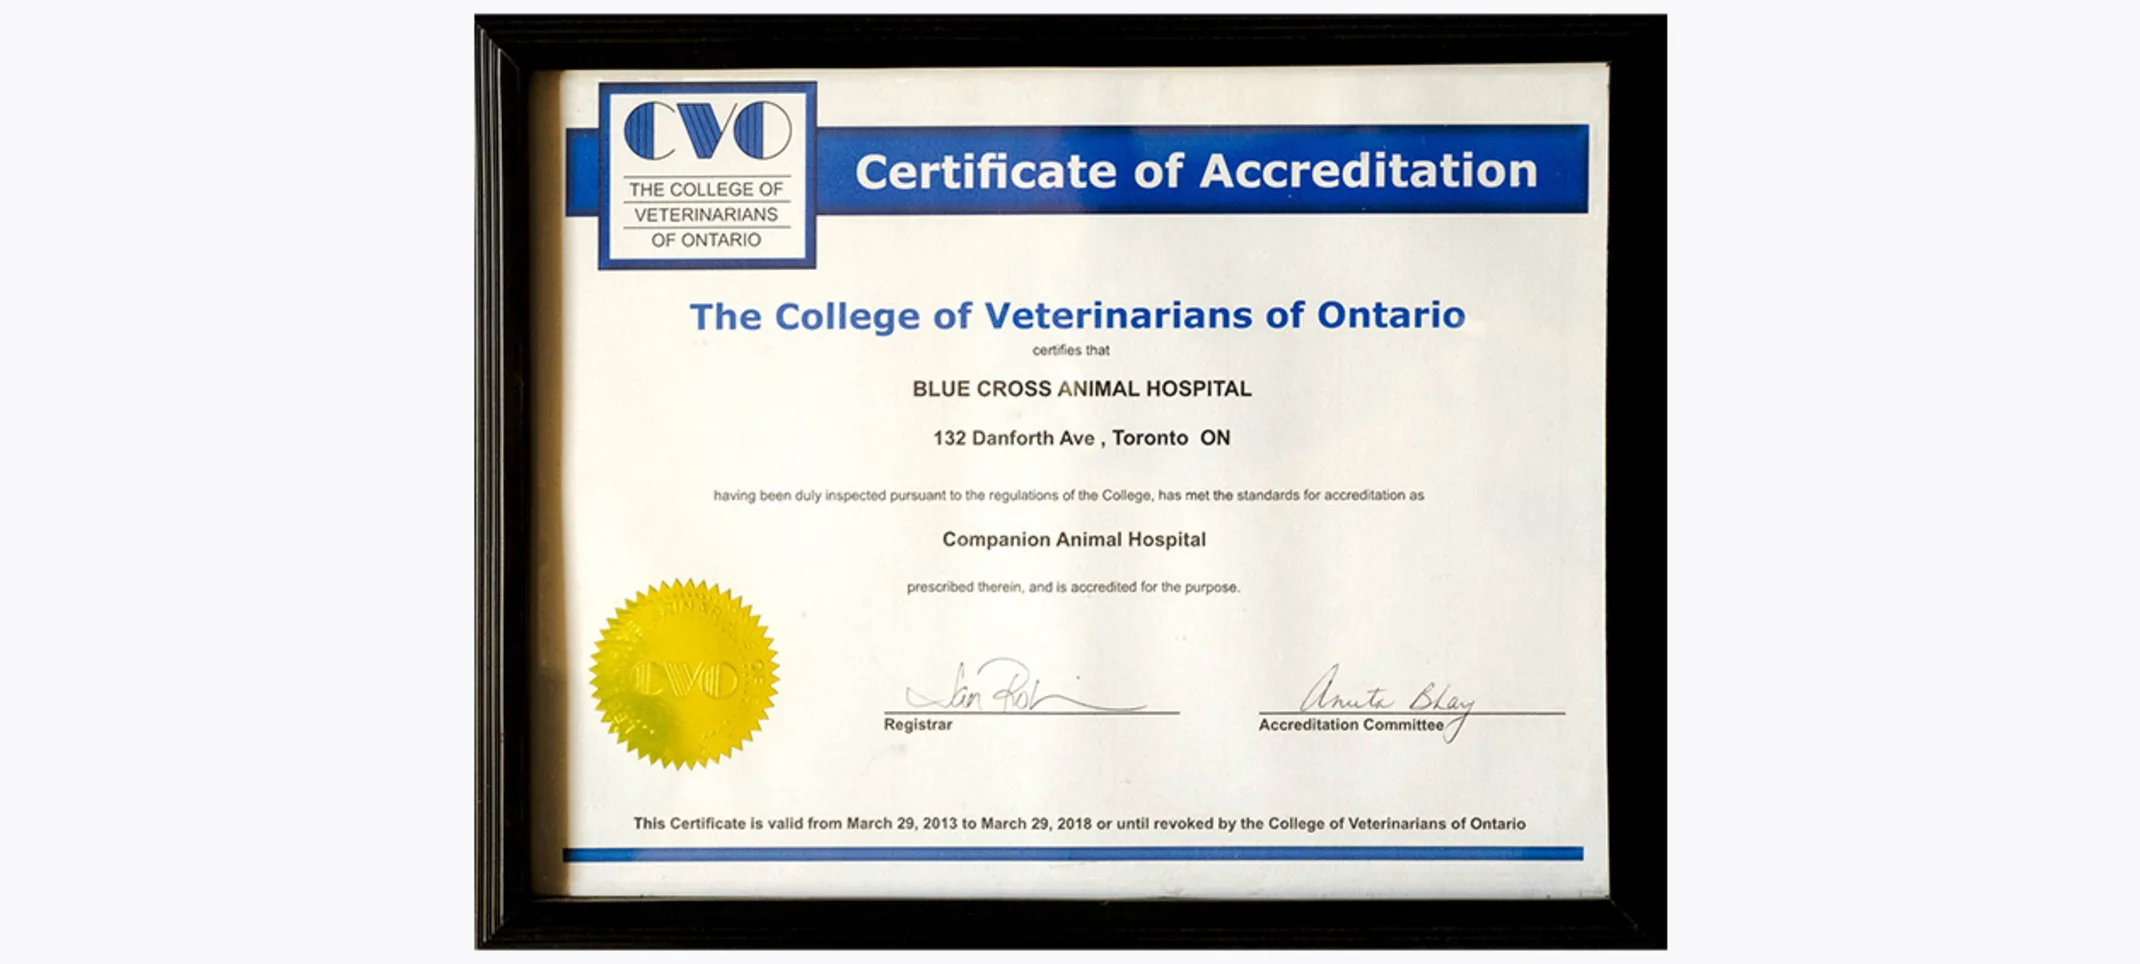 CVO Accreditation at Blue Cross Animal Hospital